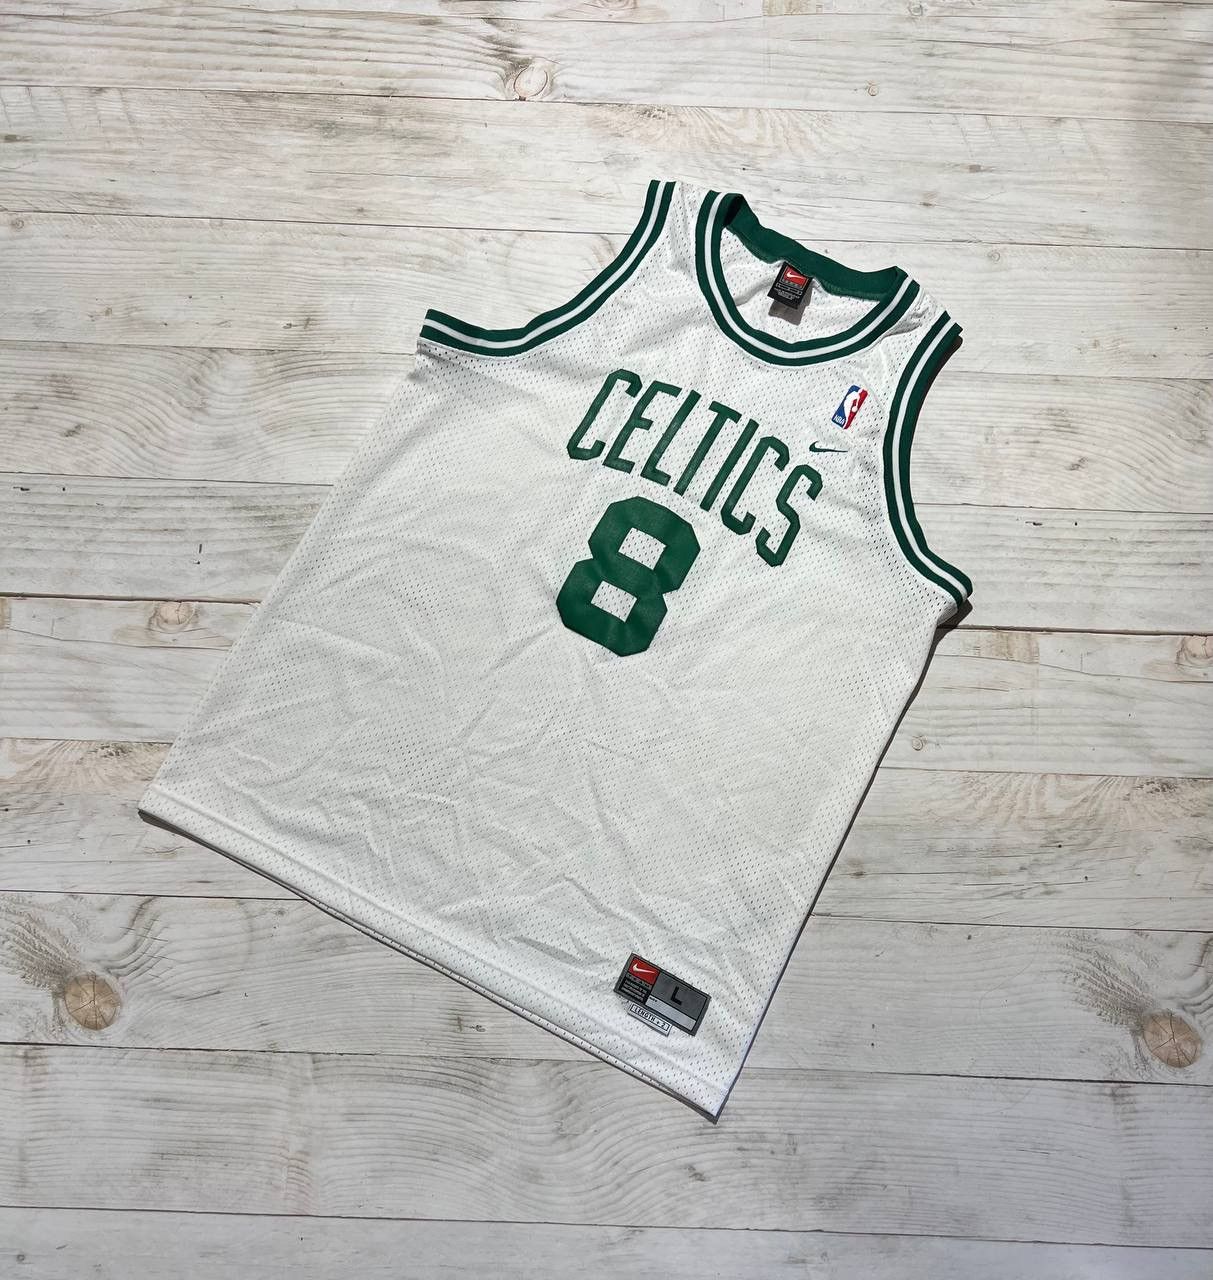 Vintage Nike Celtics jersey #8 Antoine Walker NBA